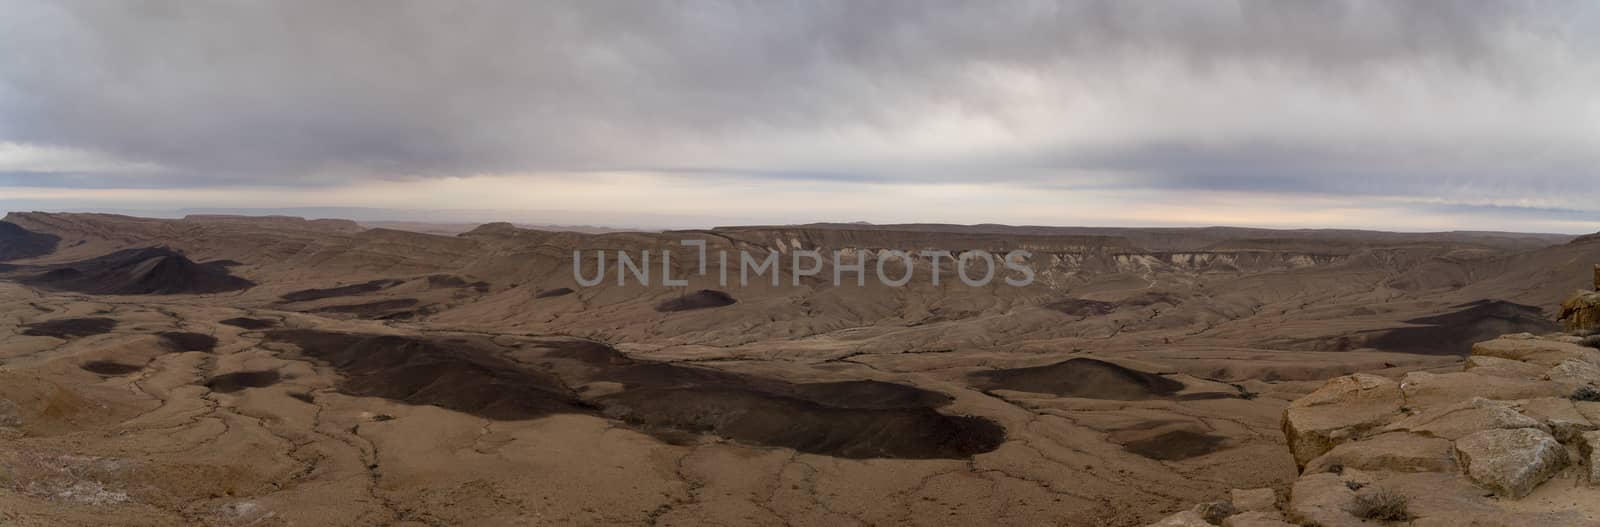 Desert panorama in Israel Ramon crater by javax